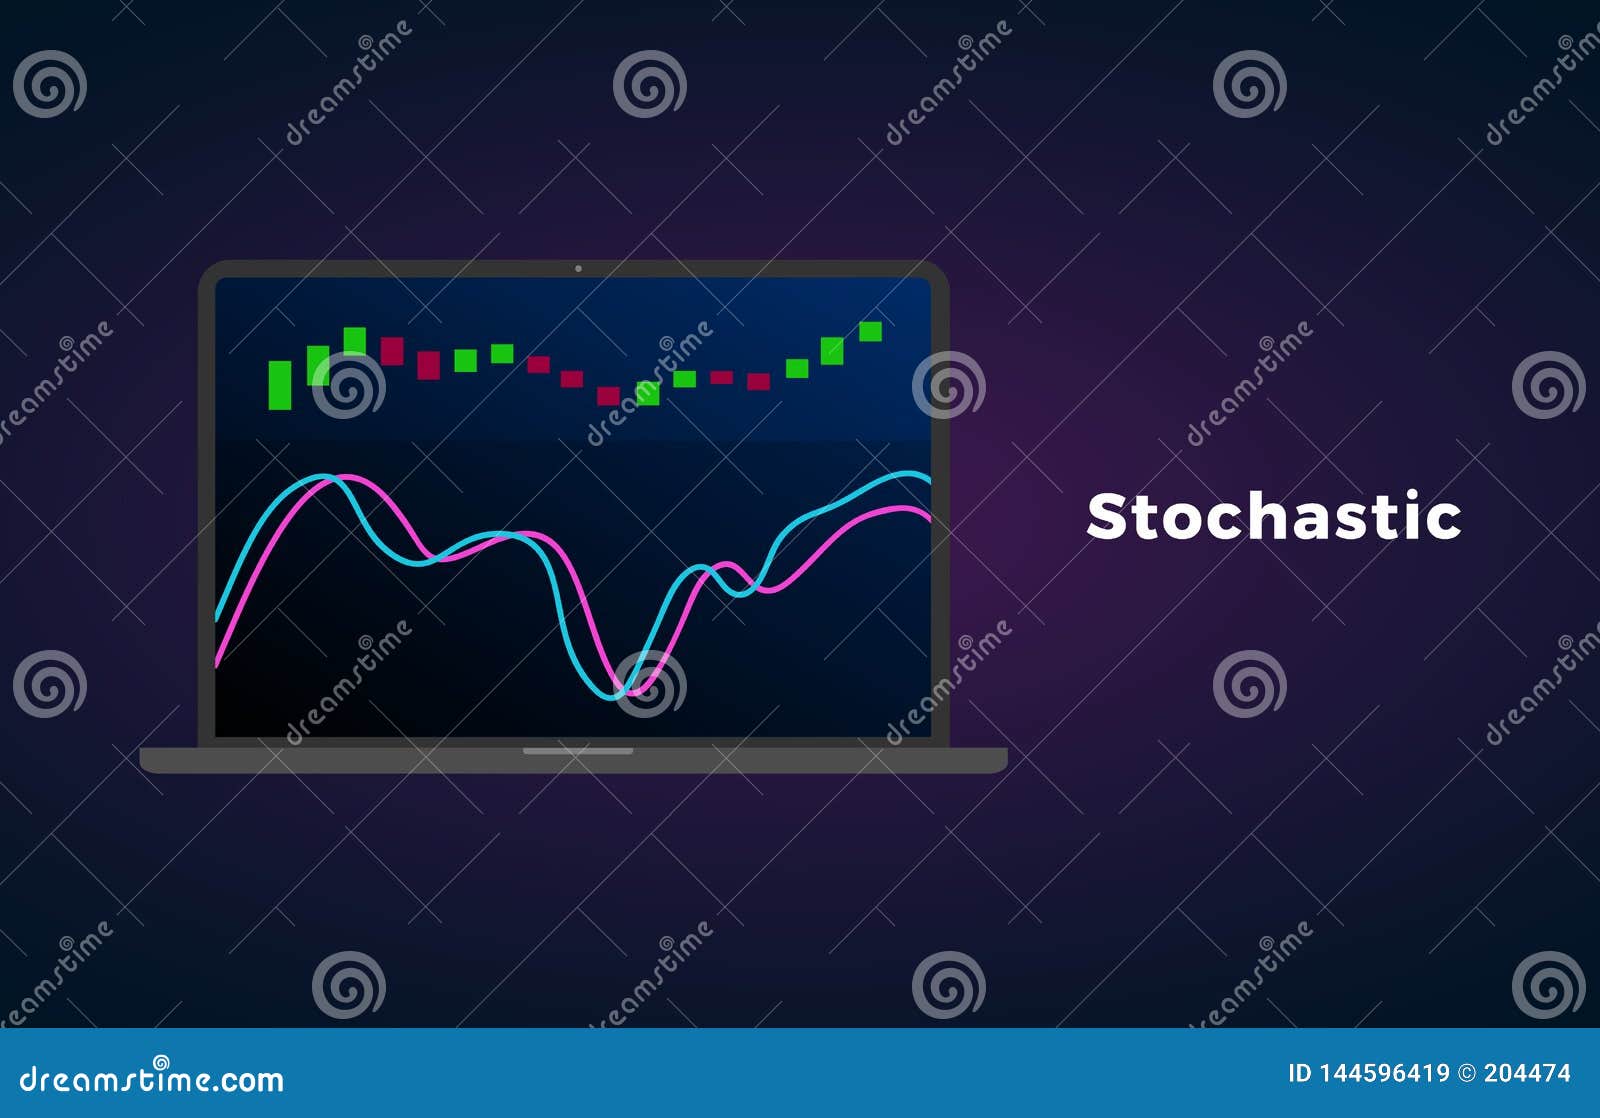 Stochastic Stock Chart